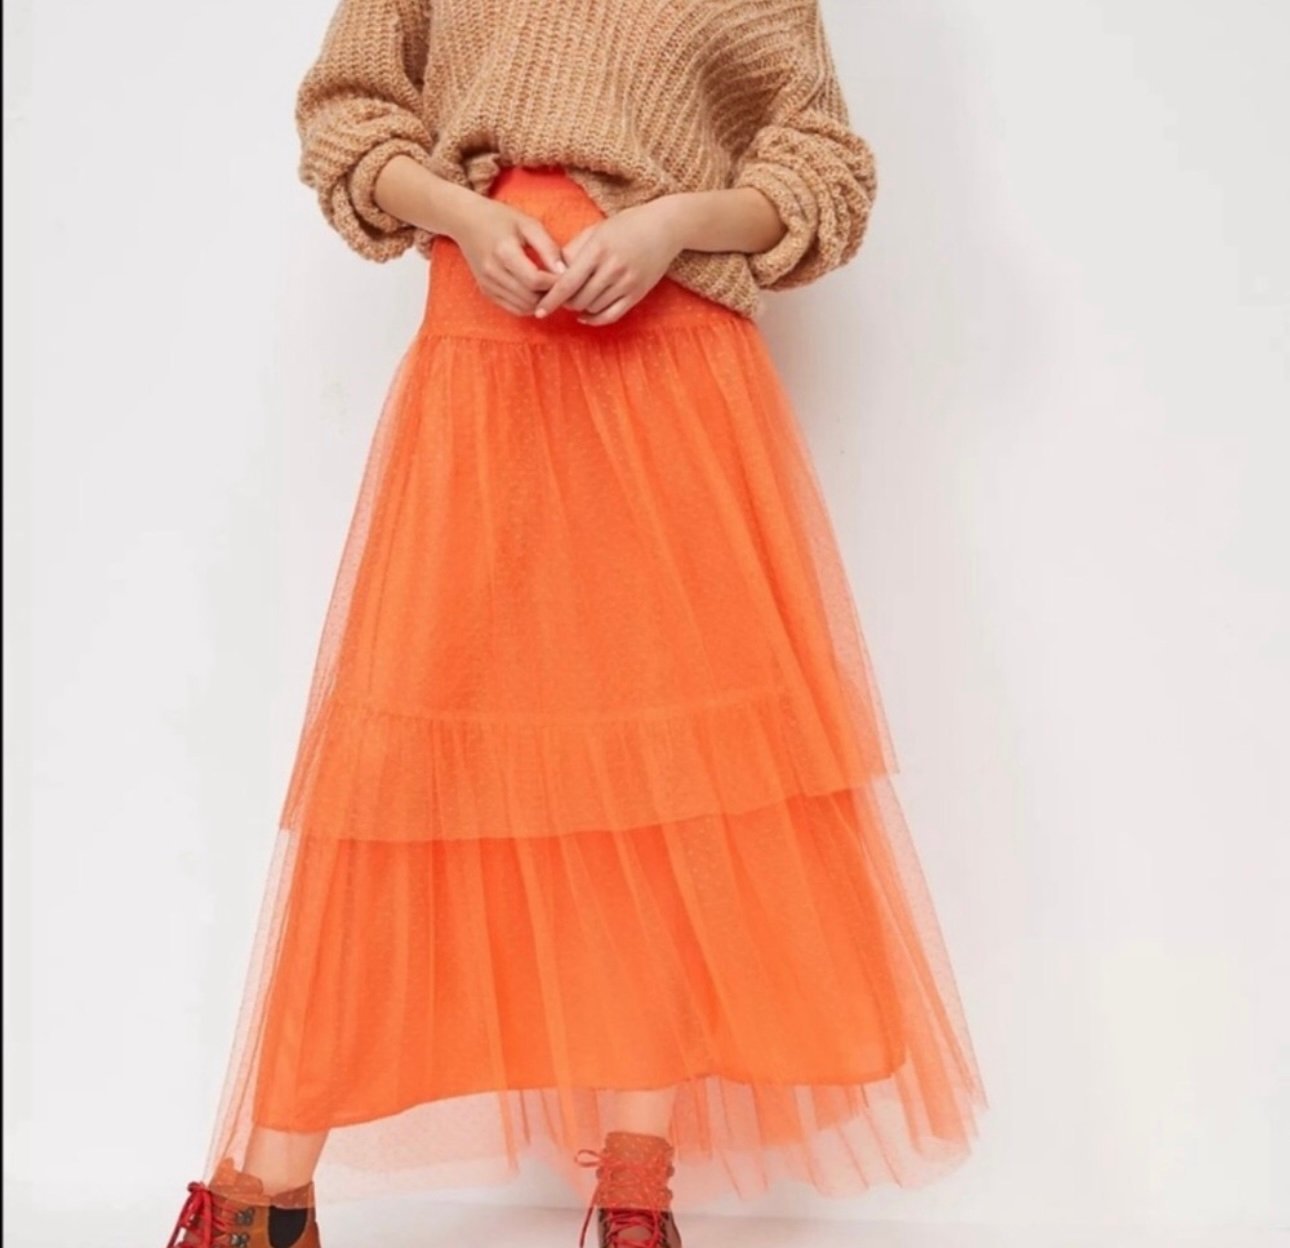 large selection ANTHROPOLOGIE Evelyn Tiered Tulle Lace MIDI Skirt Orange SIZE L OT61UNp0e outlet online shop